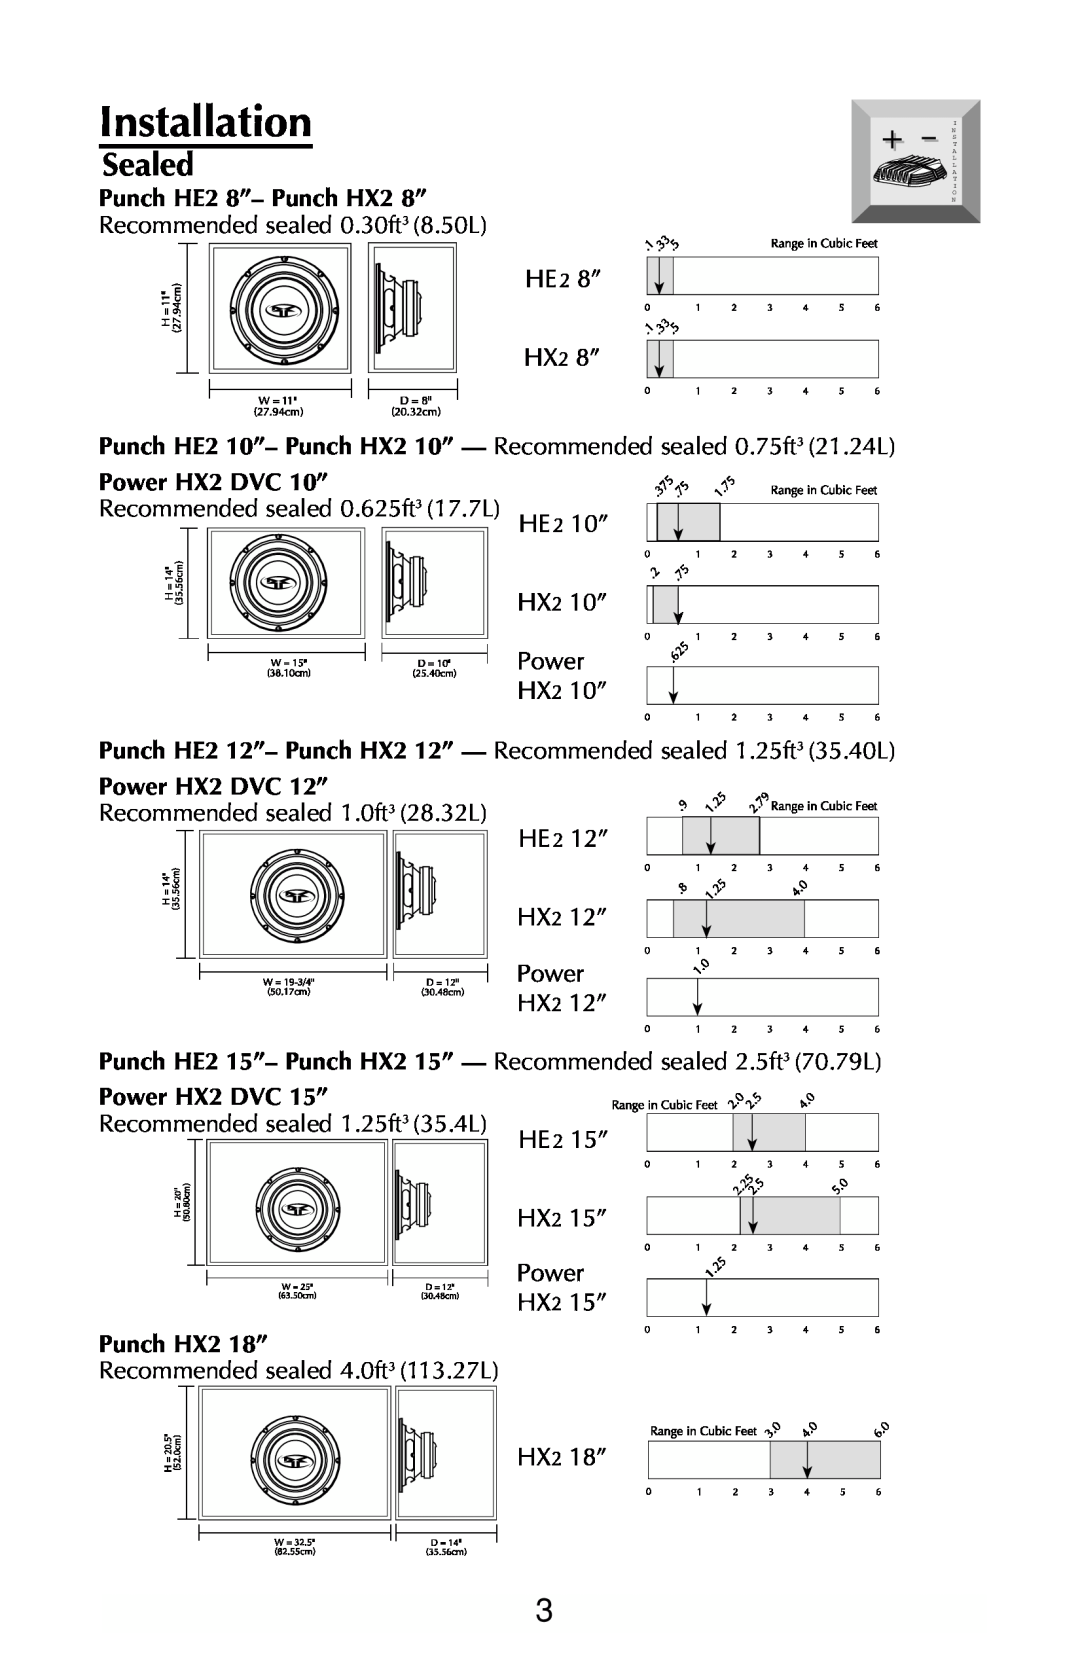 Rockford Fosgate RFD2218 manual Sealed, Installation, + - N, Punch HE2 8”- Punch HX2 8”, Power HX2 DVC 10”, Punch HX2 18” 